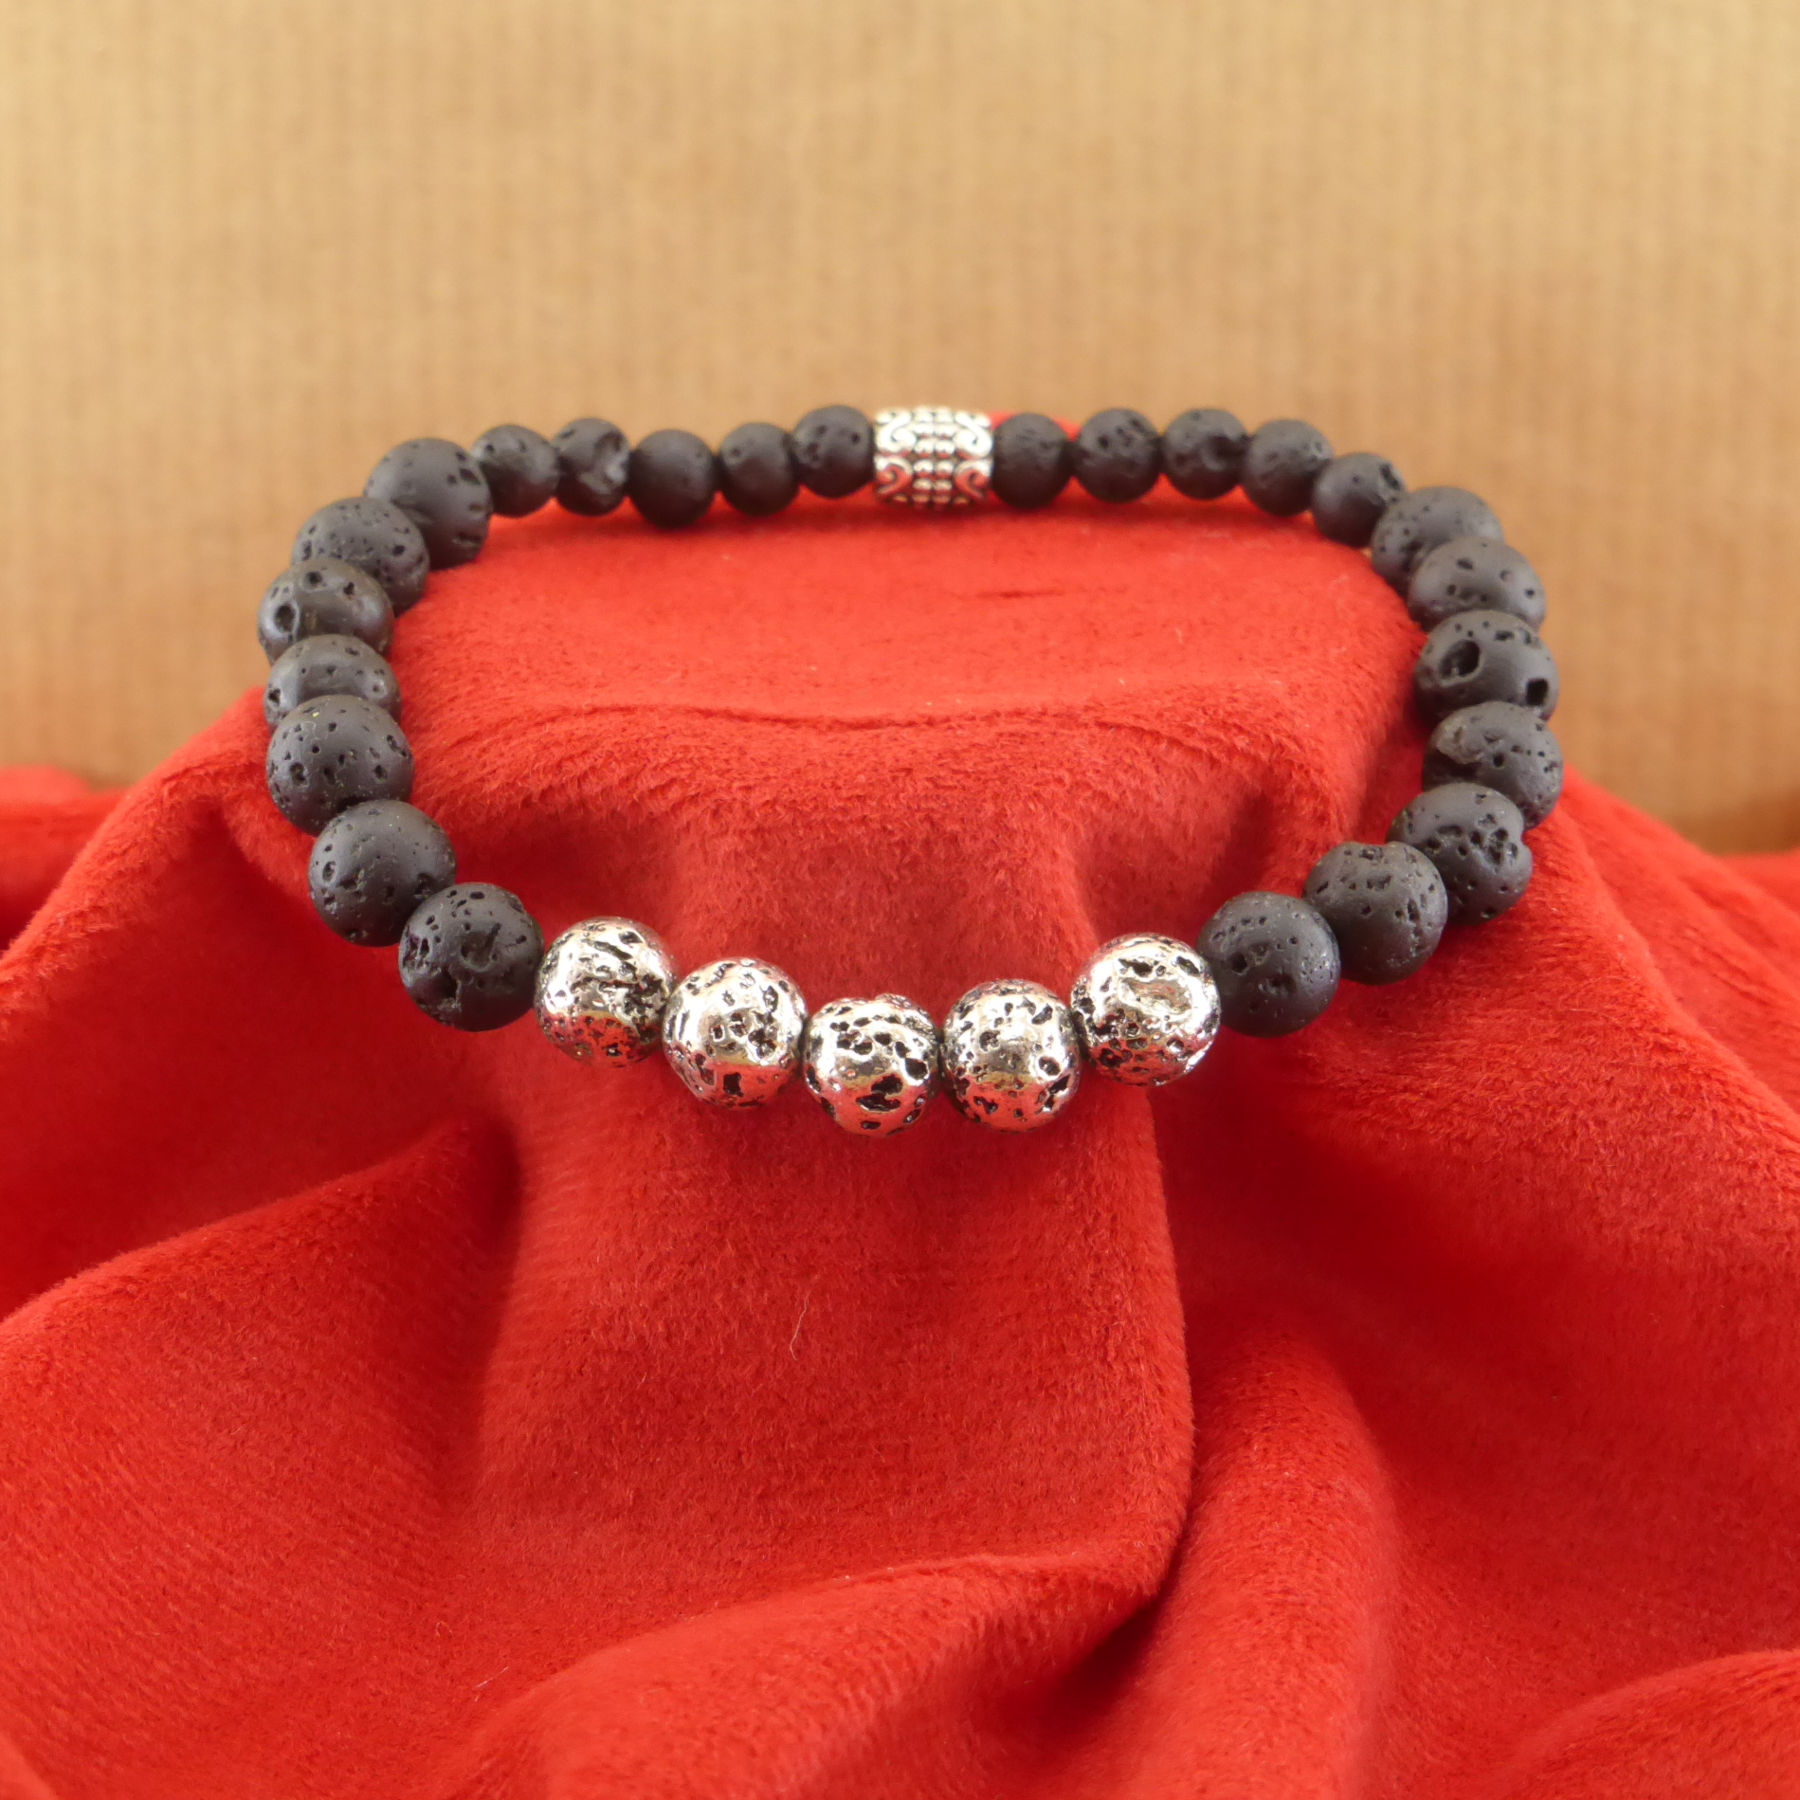 Black and silver lava stone bracelet